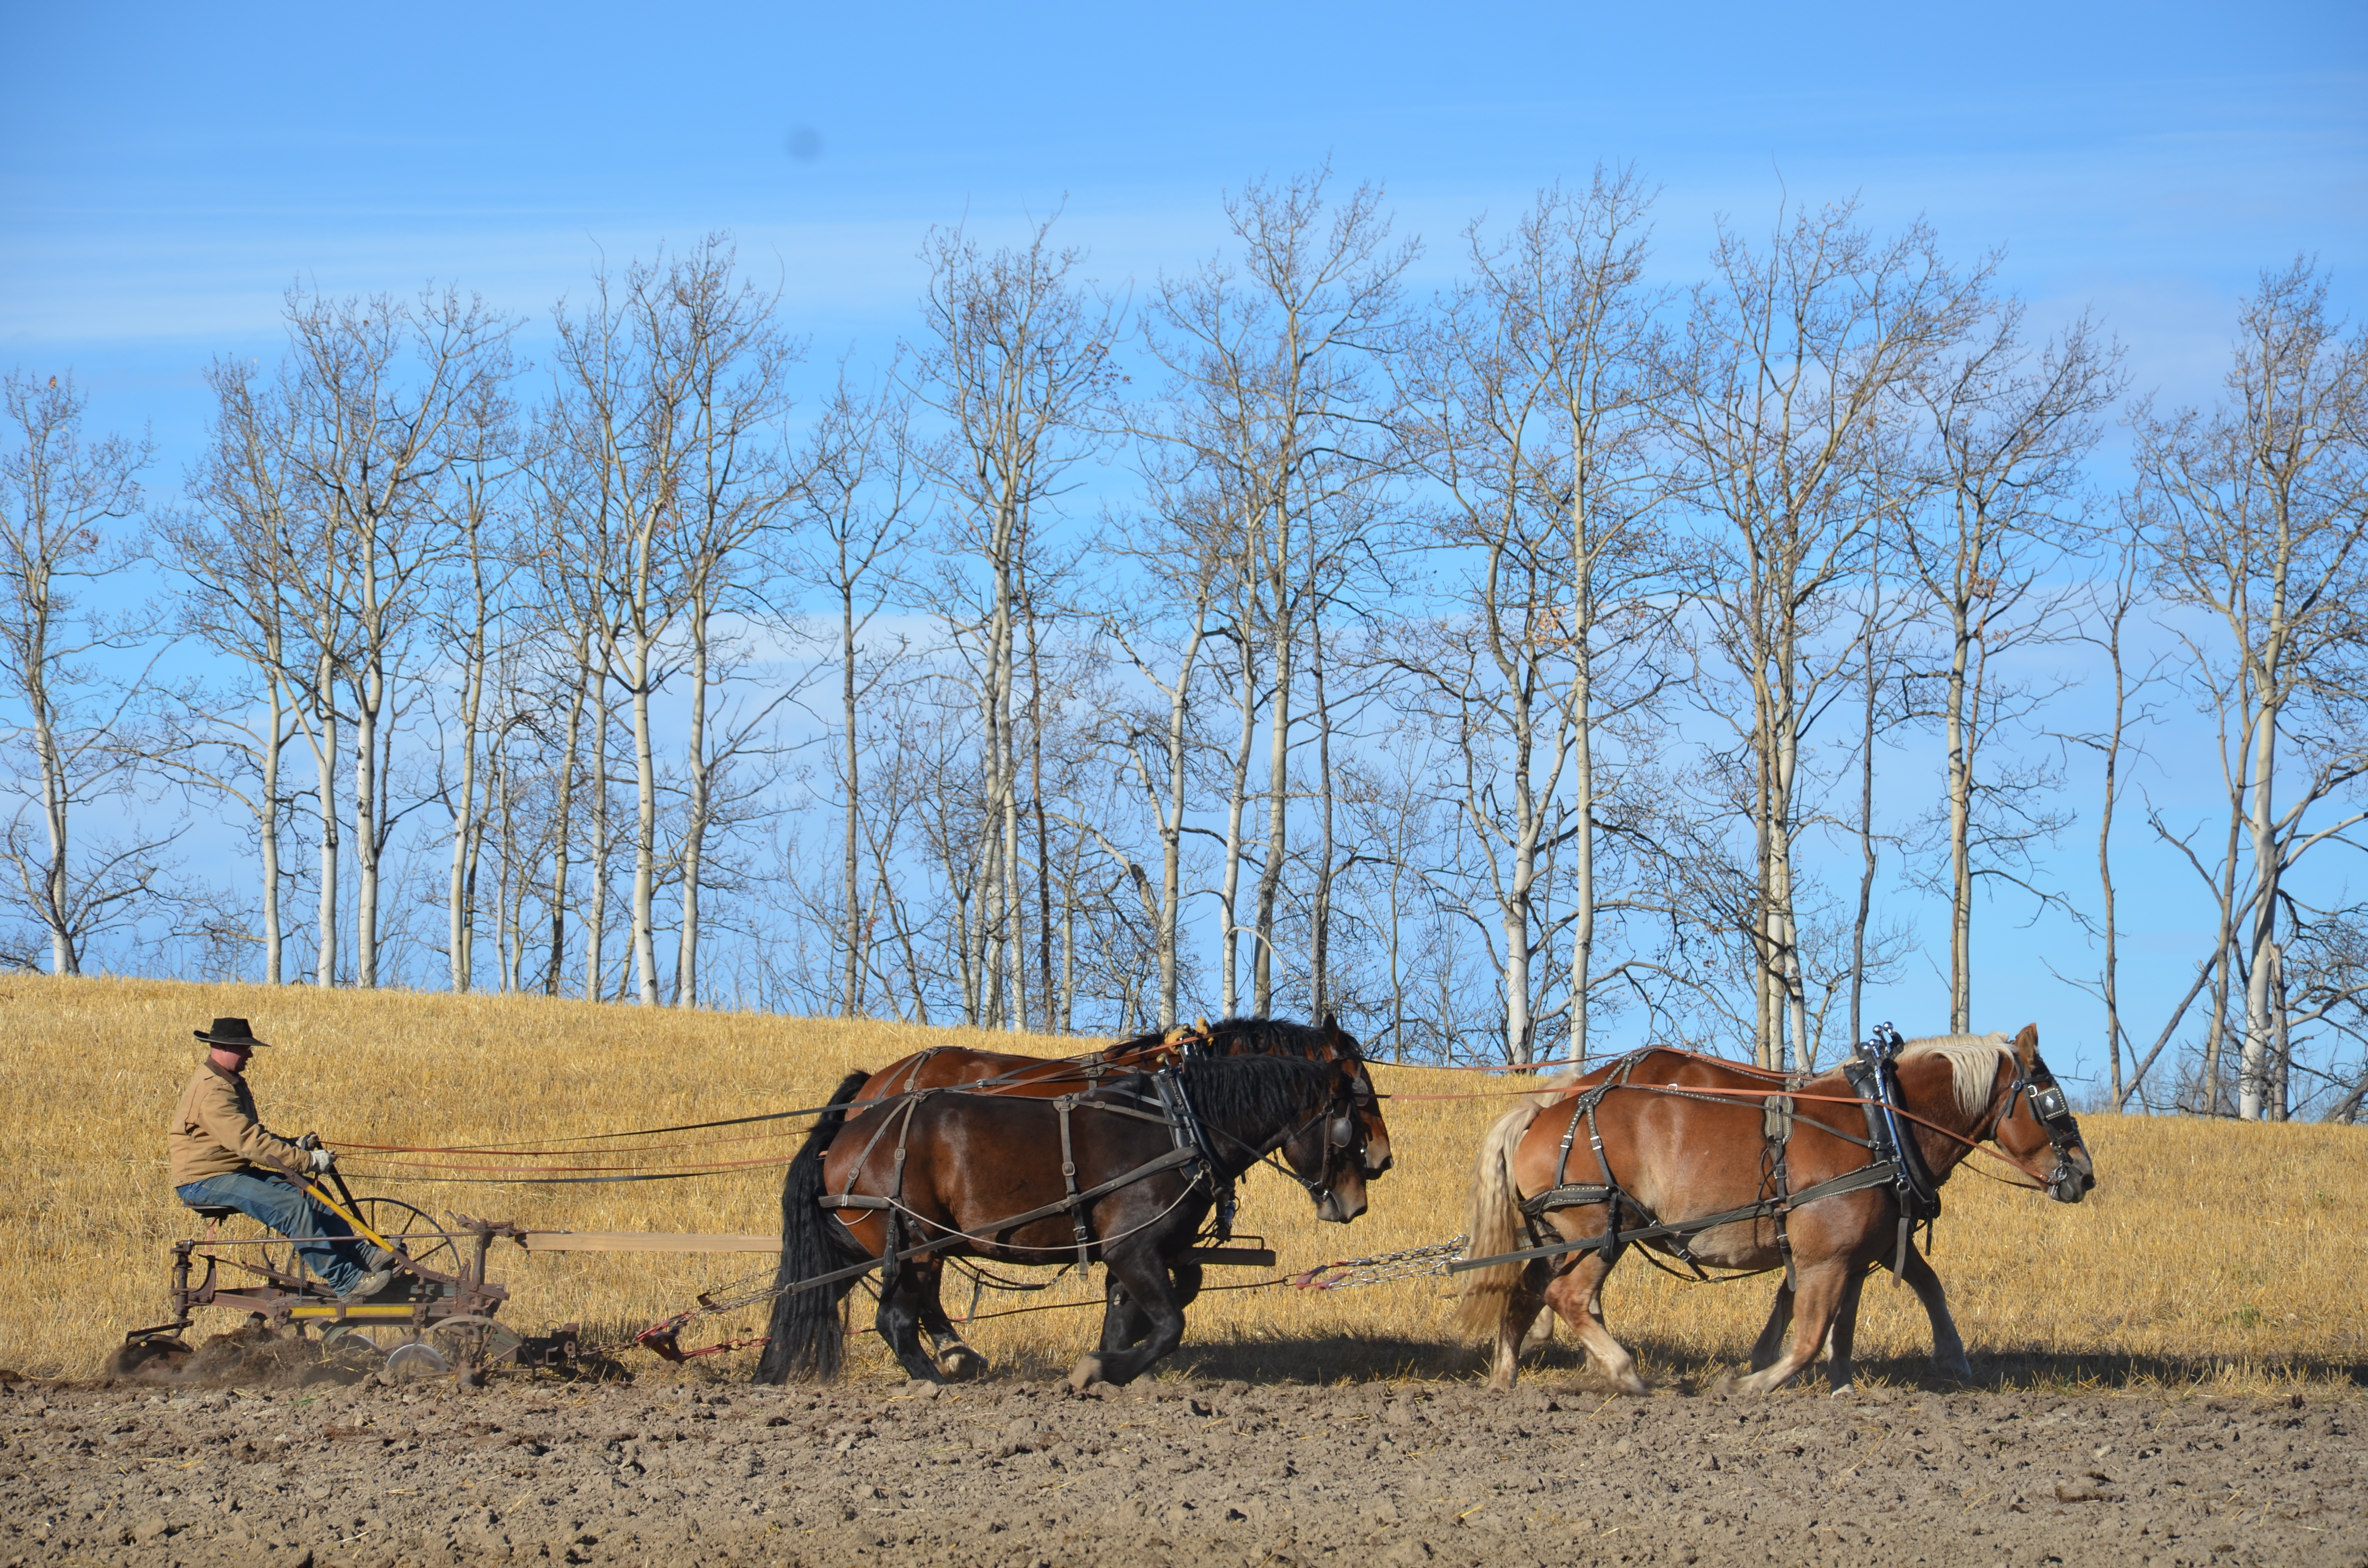 Farming with horses – like our grandfathers did | globalfarmerdotcom